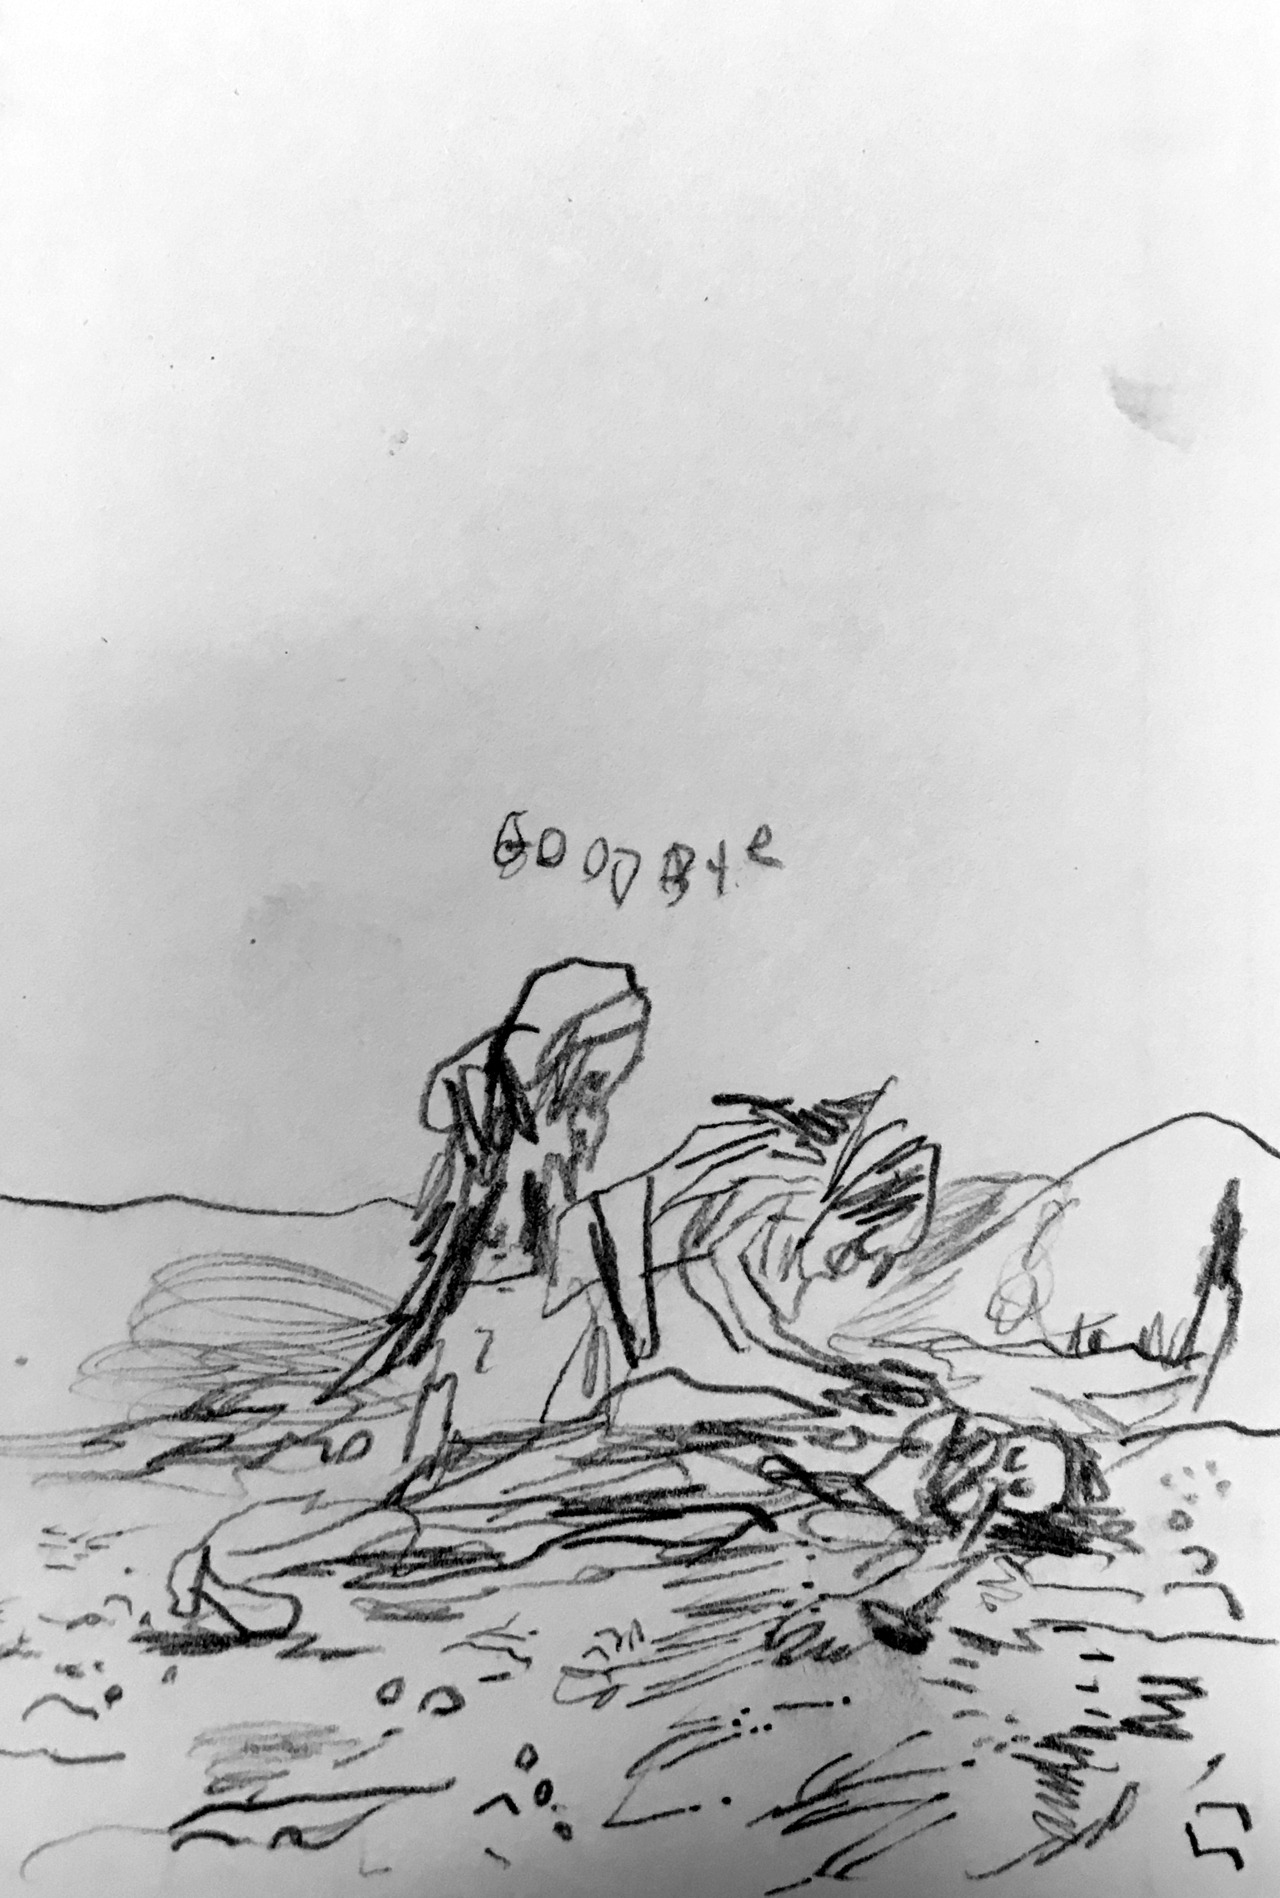 MEDZ YEGHERN Drawing the Armenian Genocide (drawing the Armenian